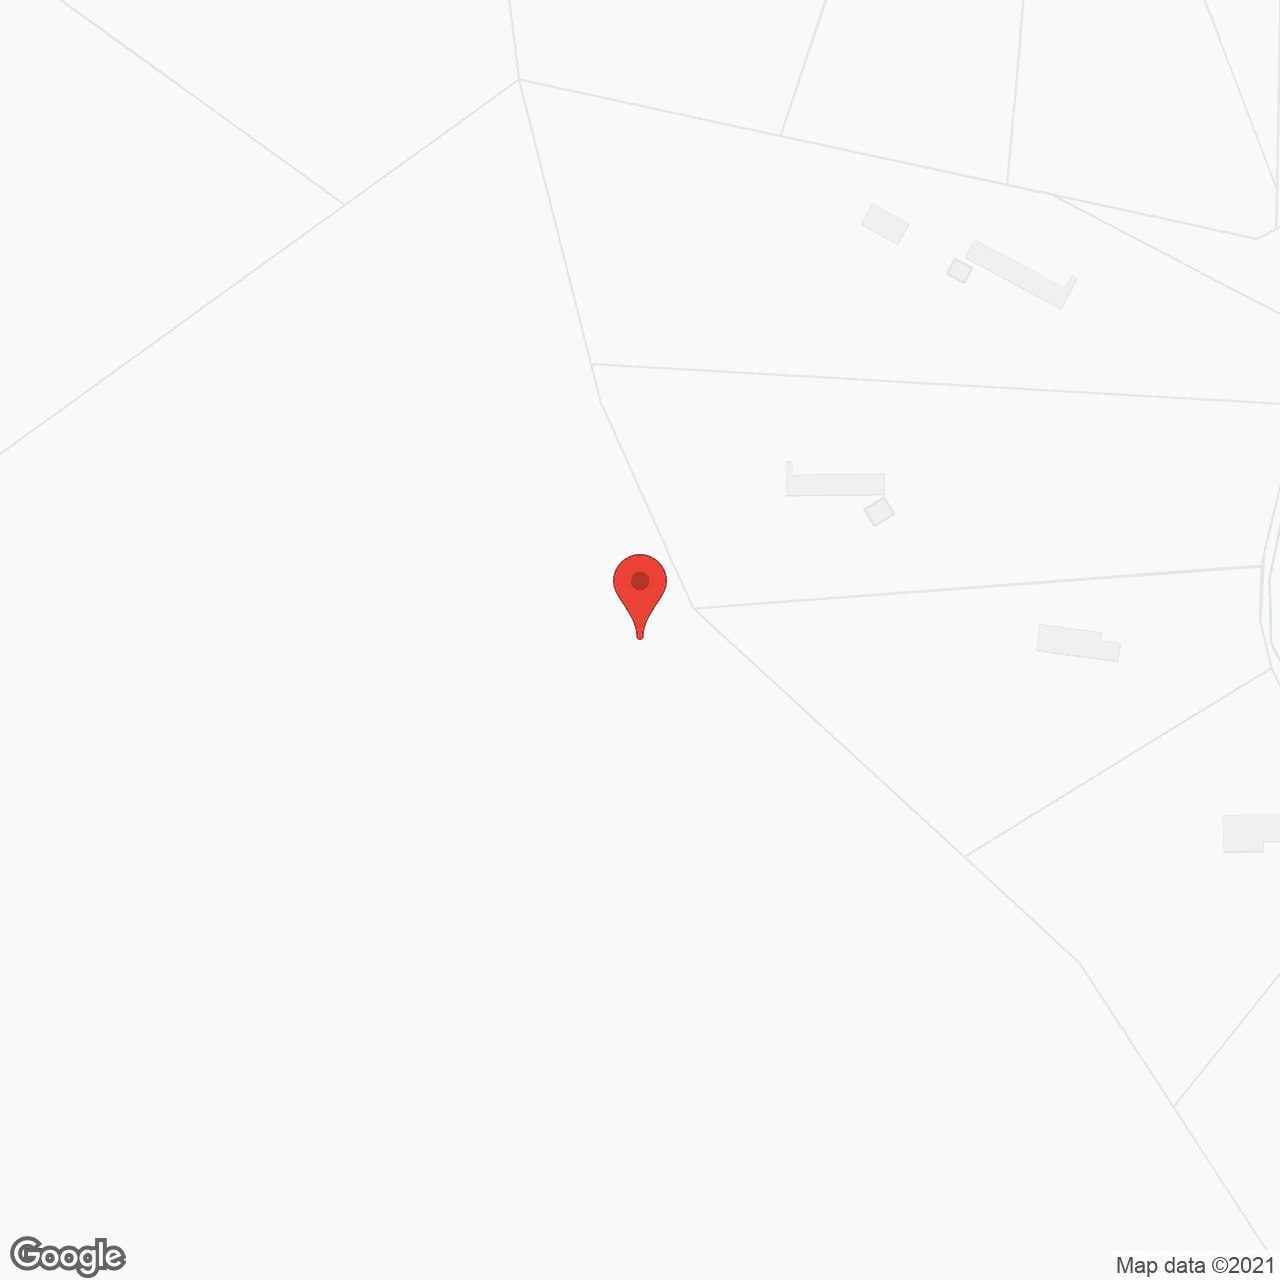 Home Instead - Murrieta, CA in google map